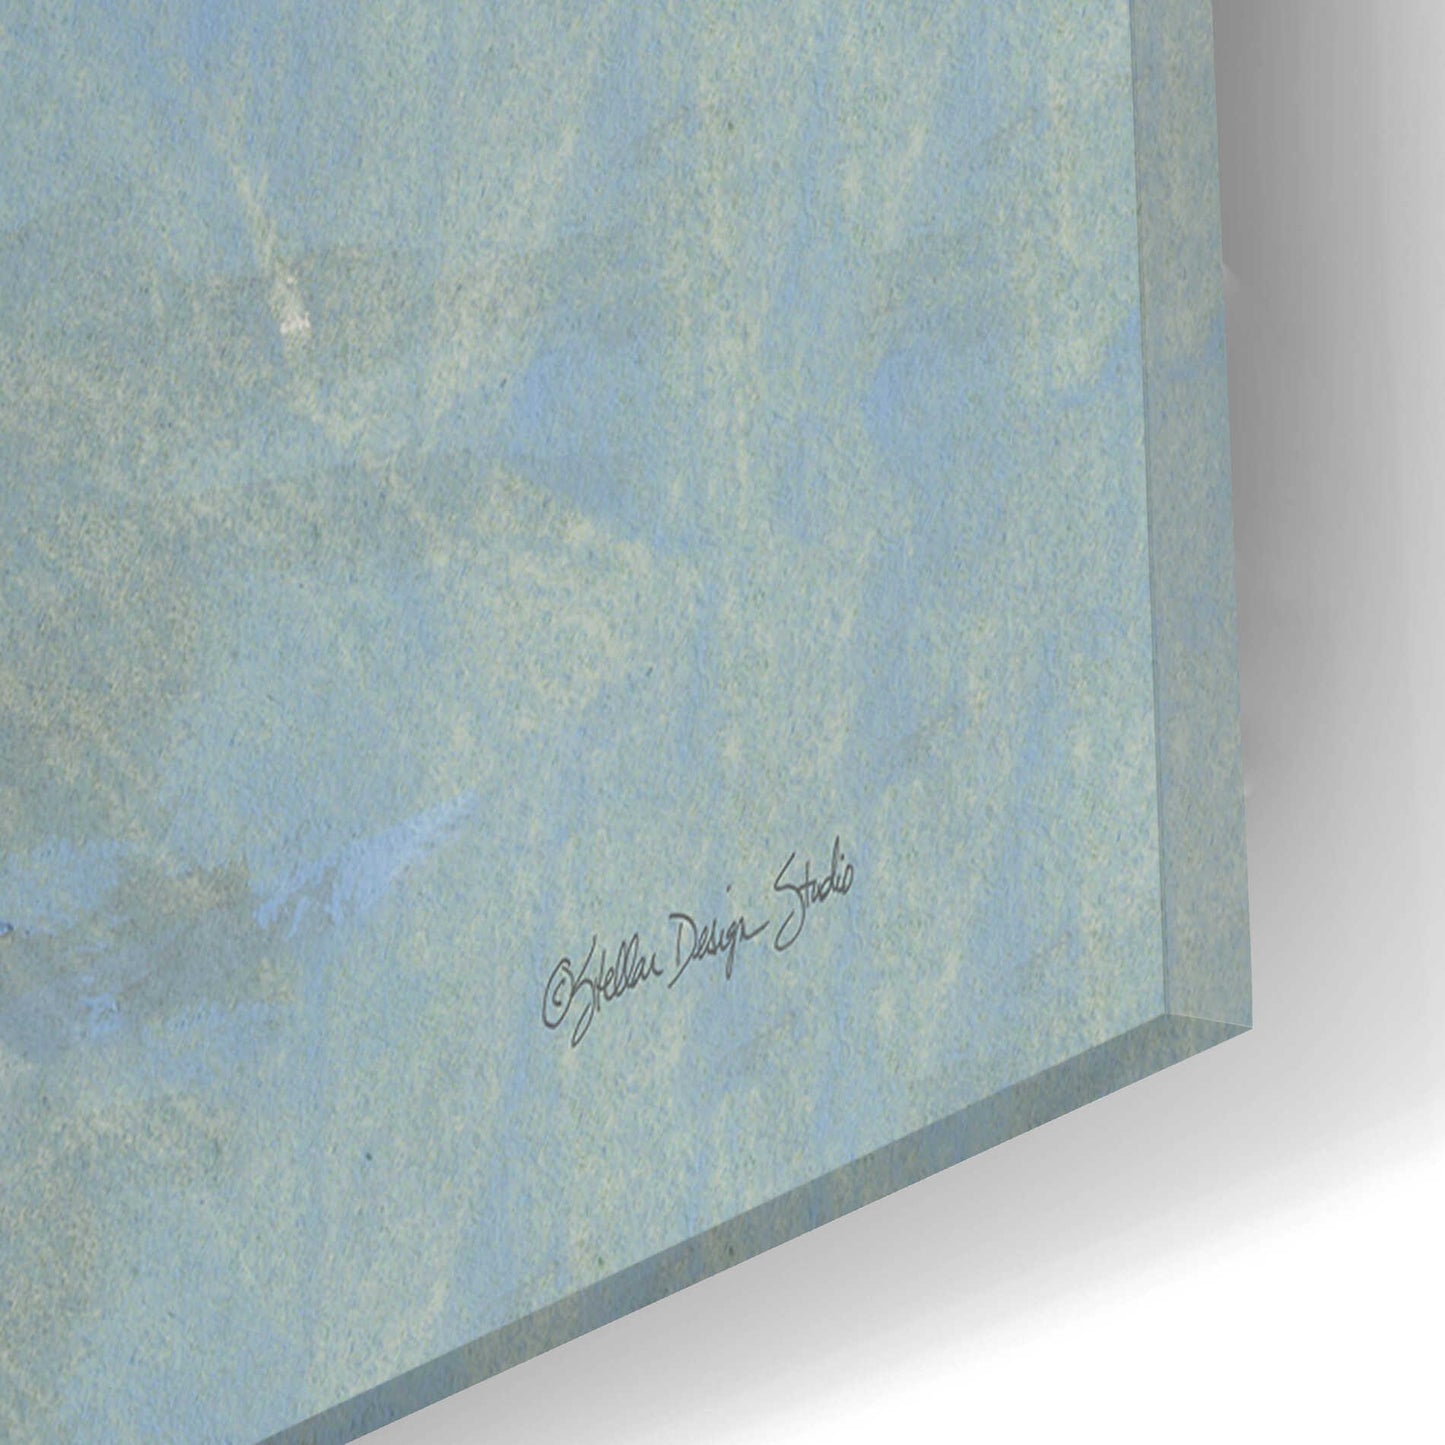 Epic Art 'Sea Bird 1' by Stellar Design Studio, Acrylic Glass Wall Art,12x16